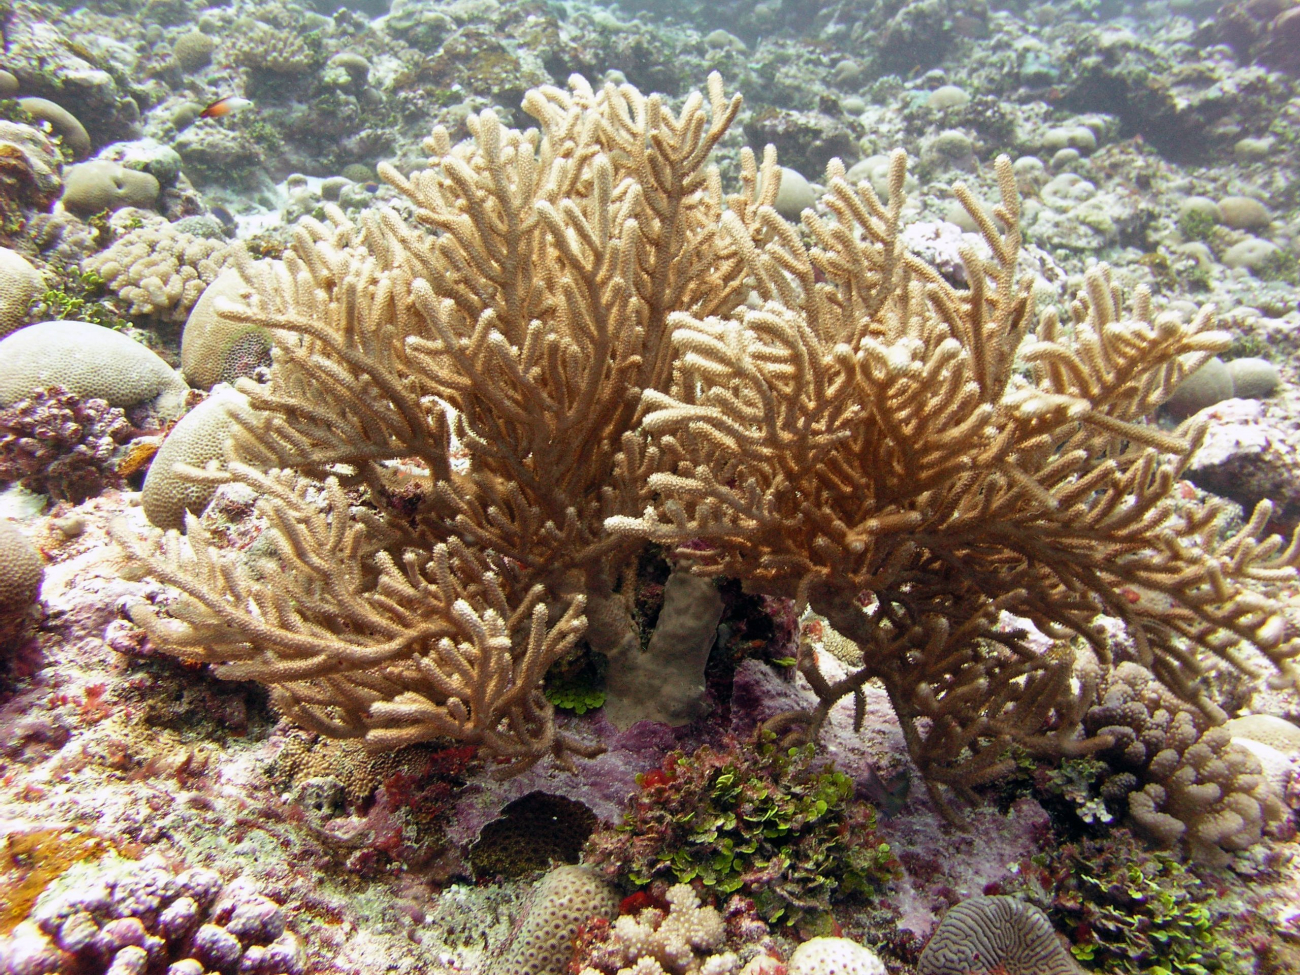 Coral and algae coexisting